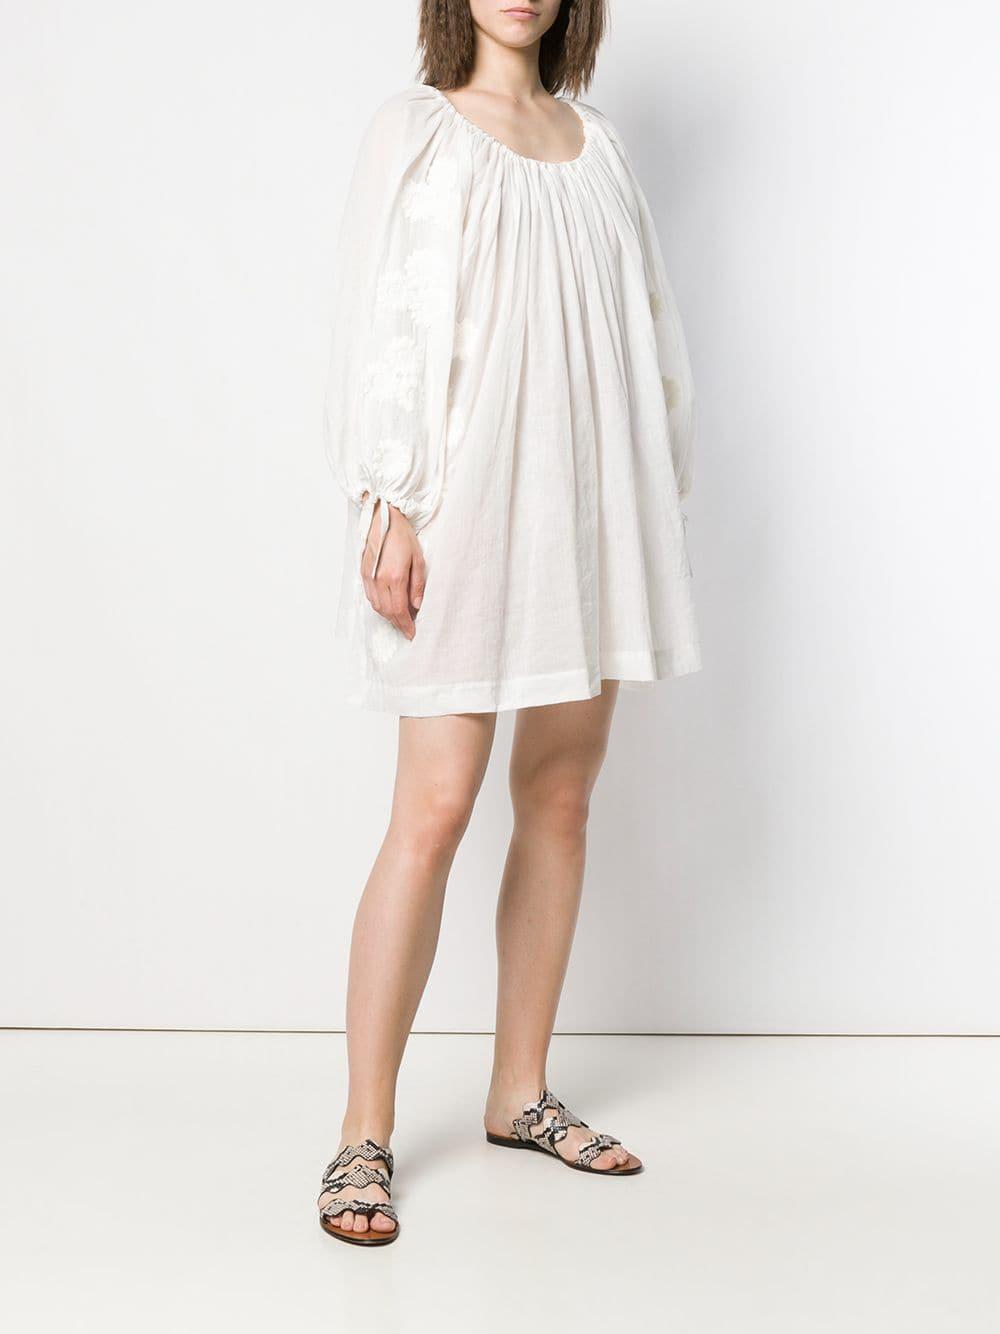 Innika Choo Pocket Smock Mini Dress in White - Lyst